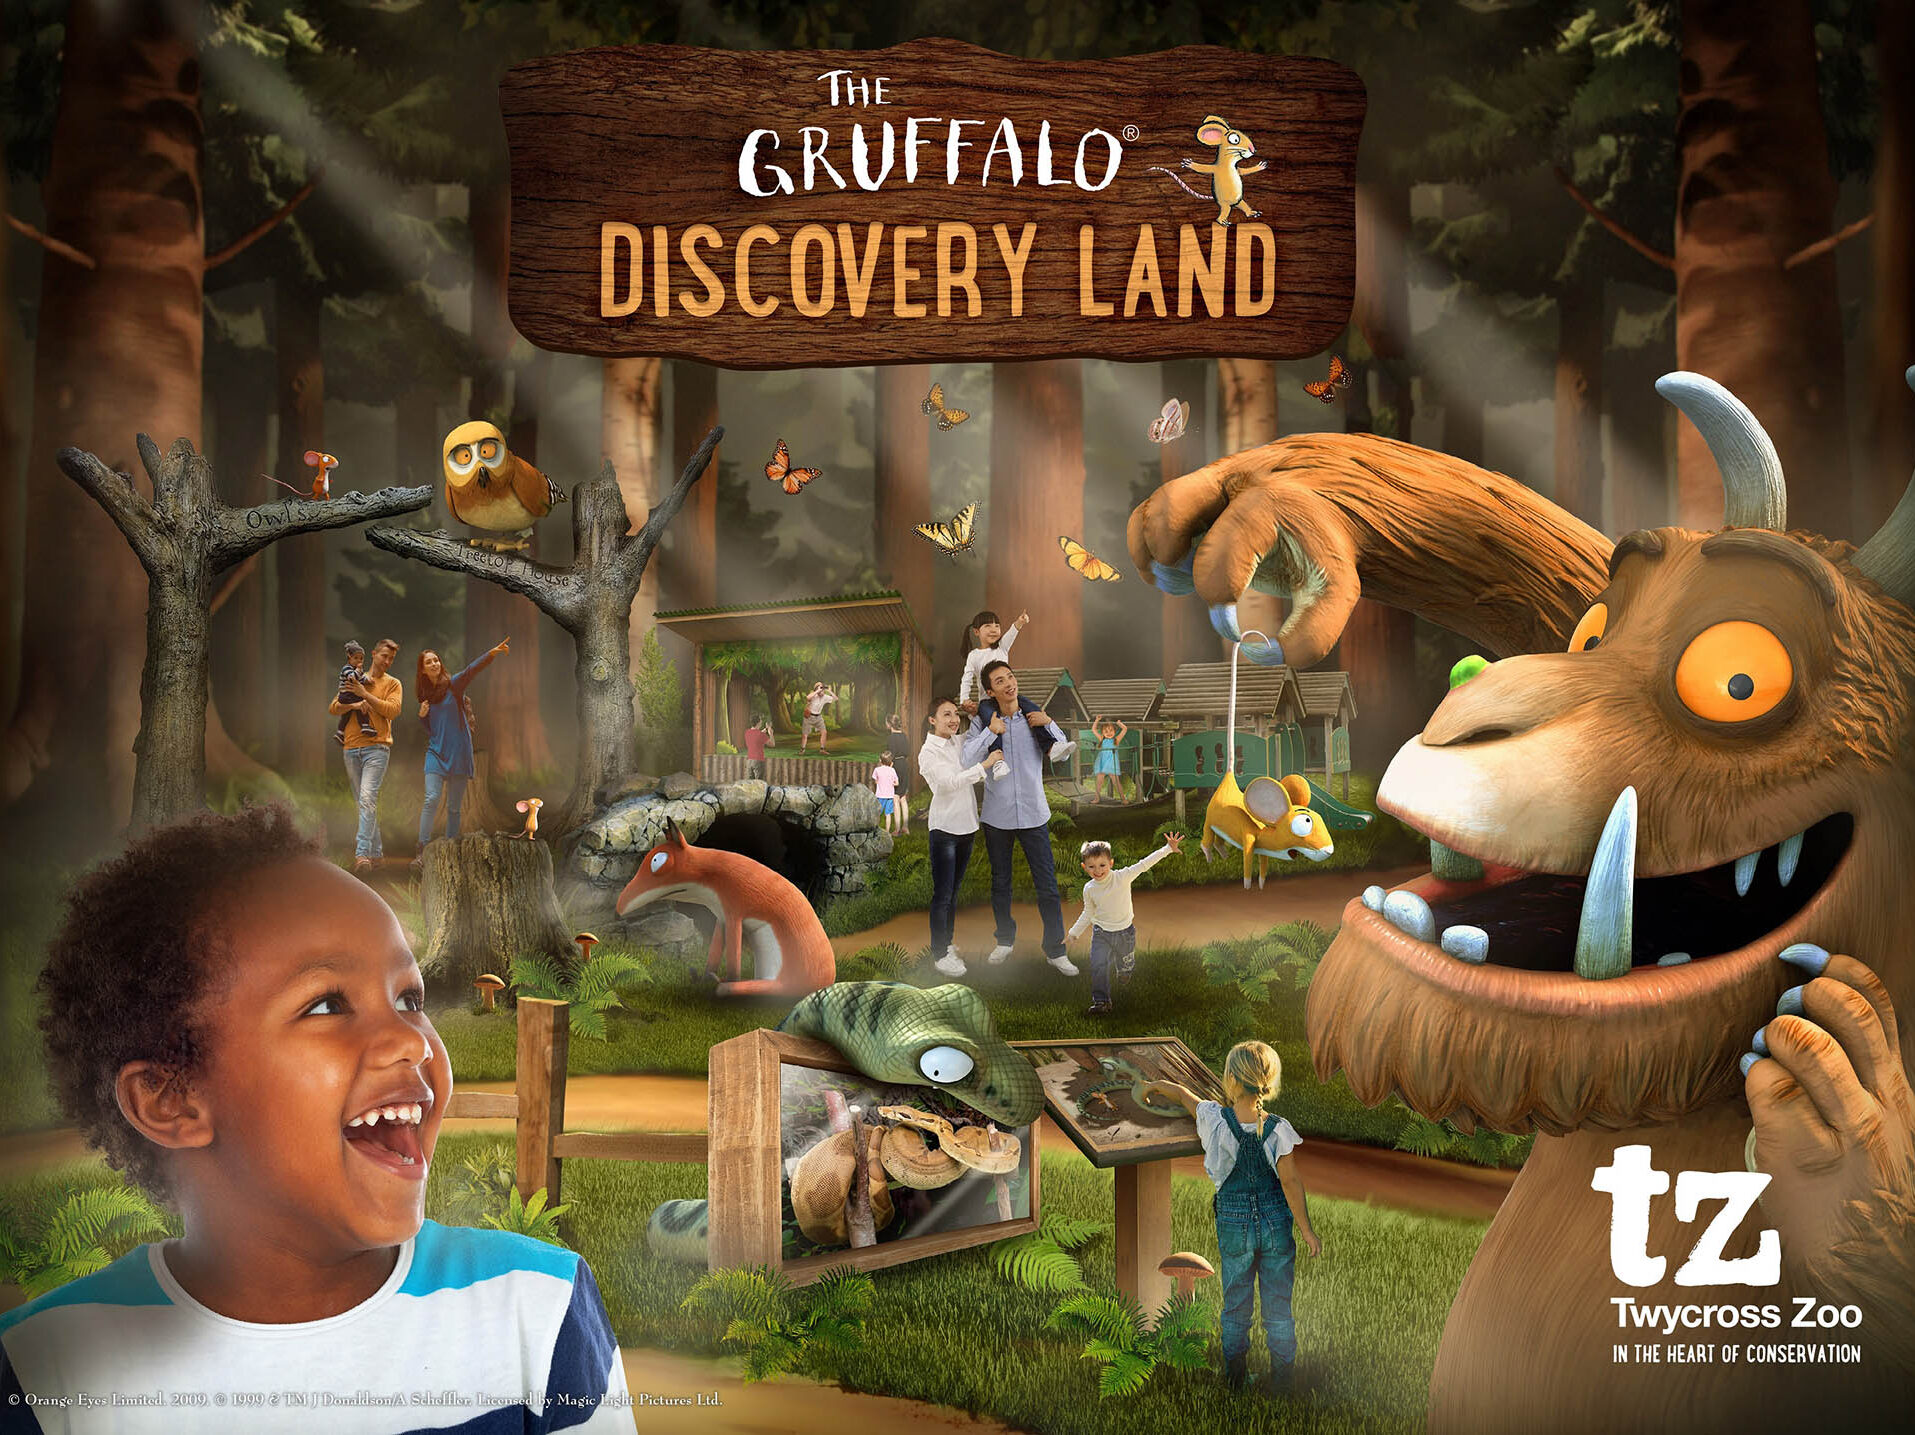 Gruffalo Discovery Land at Twycross Zoo